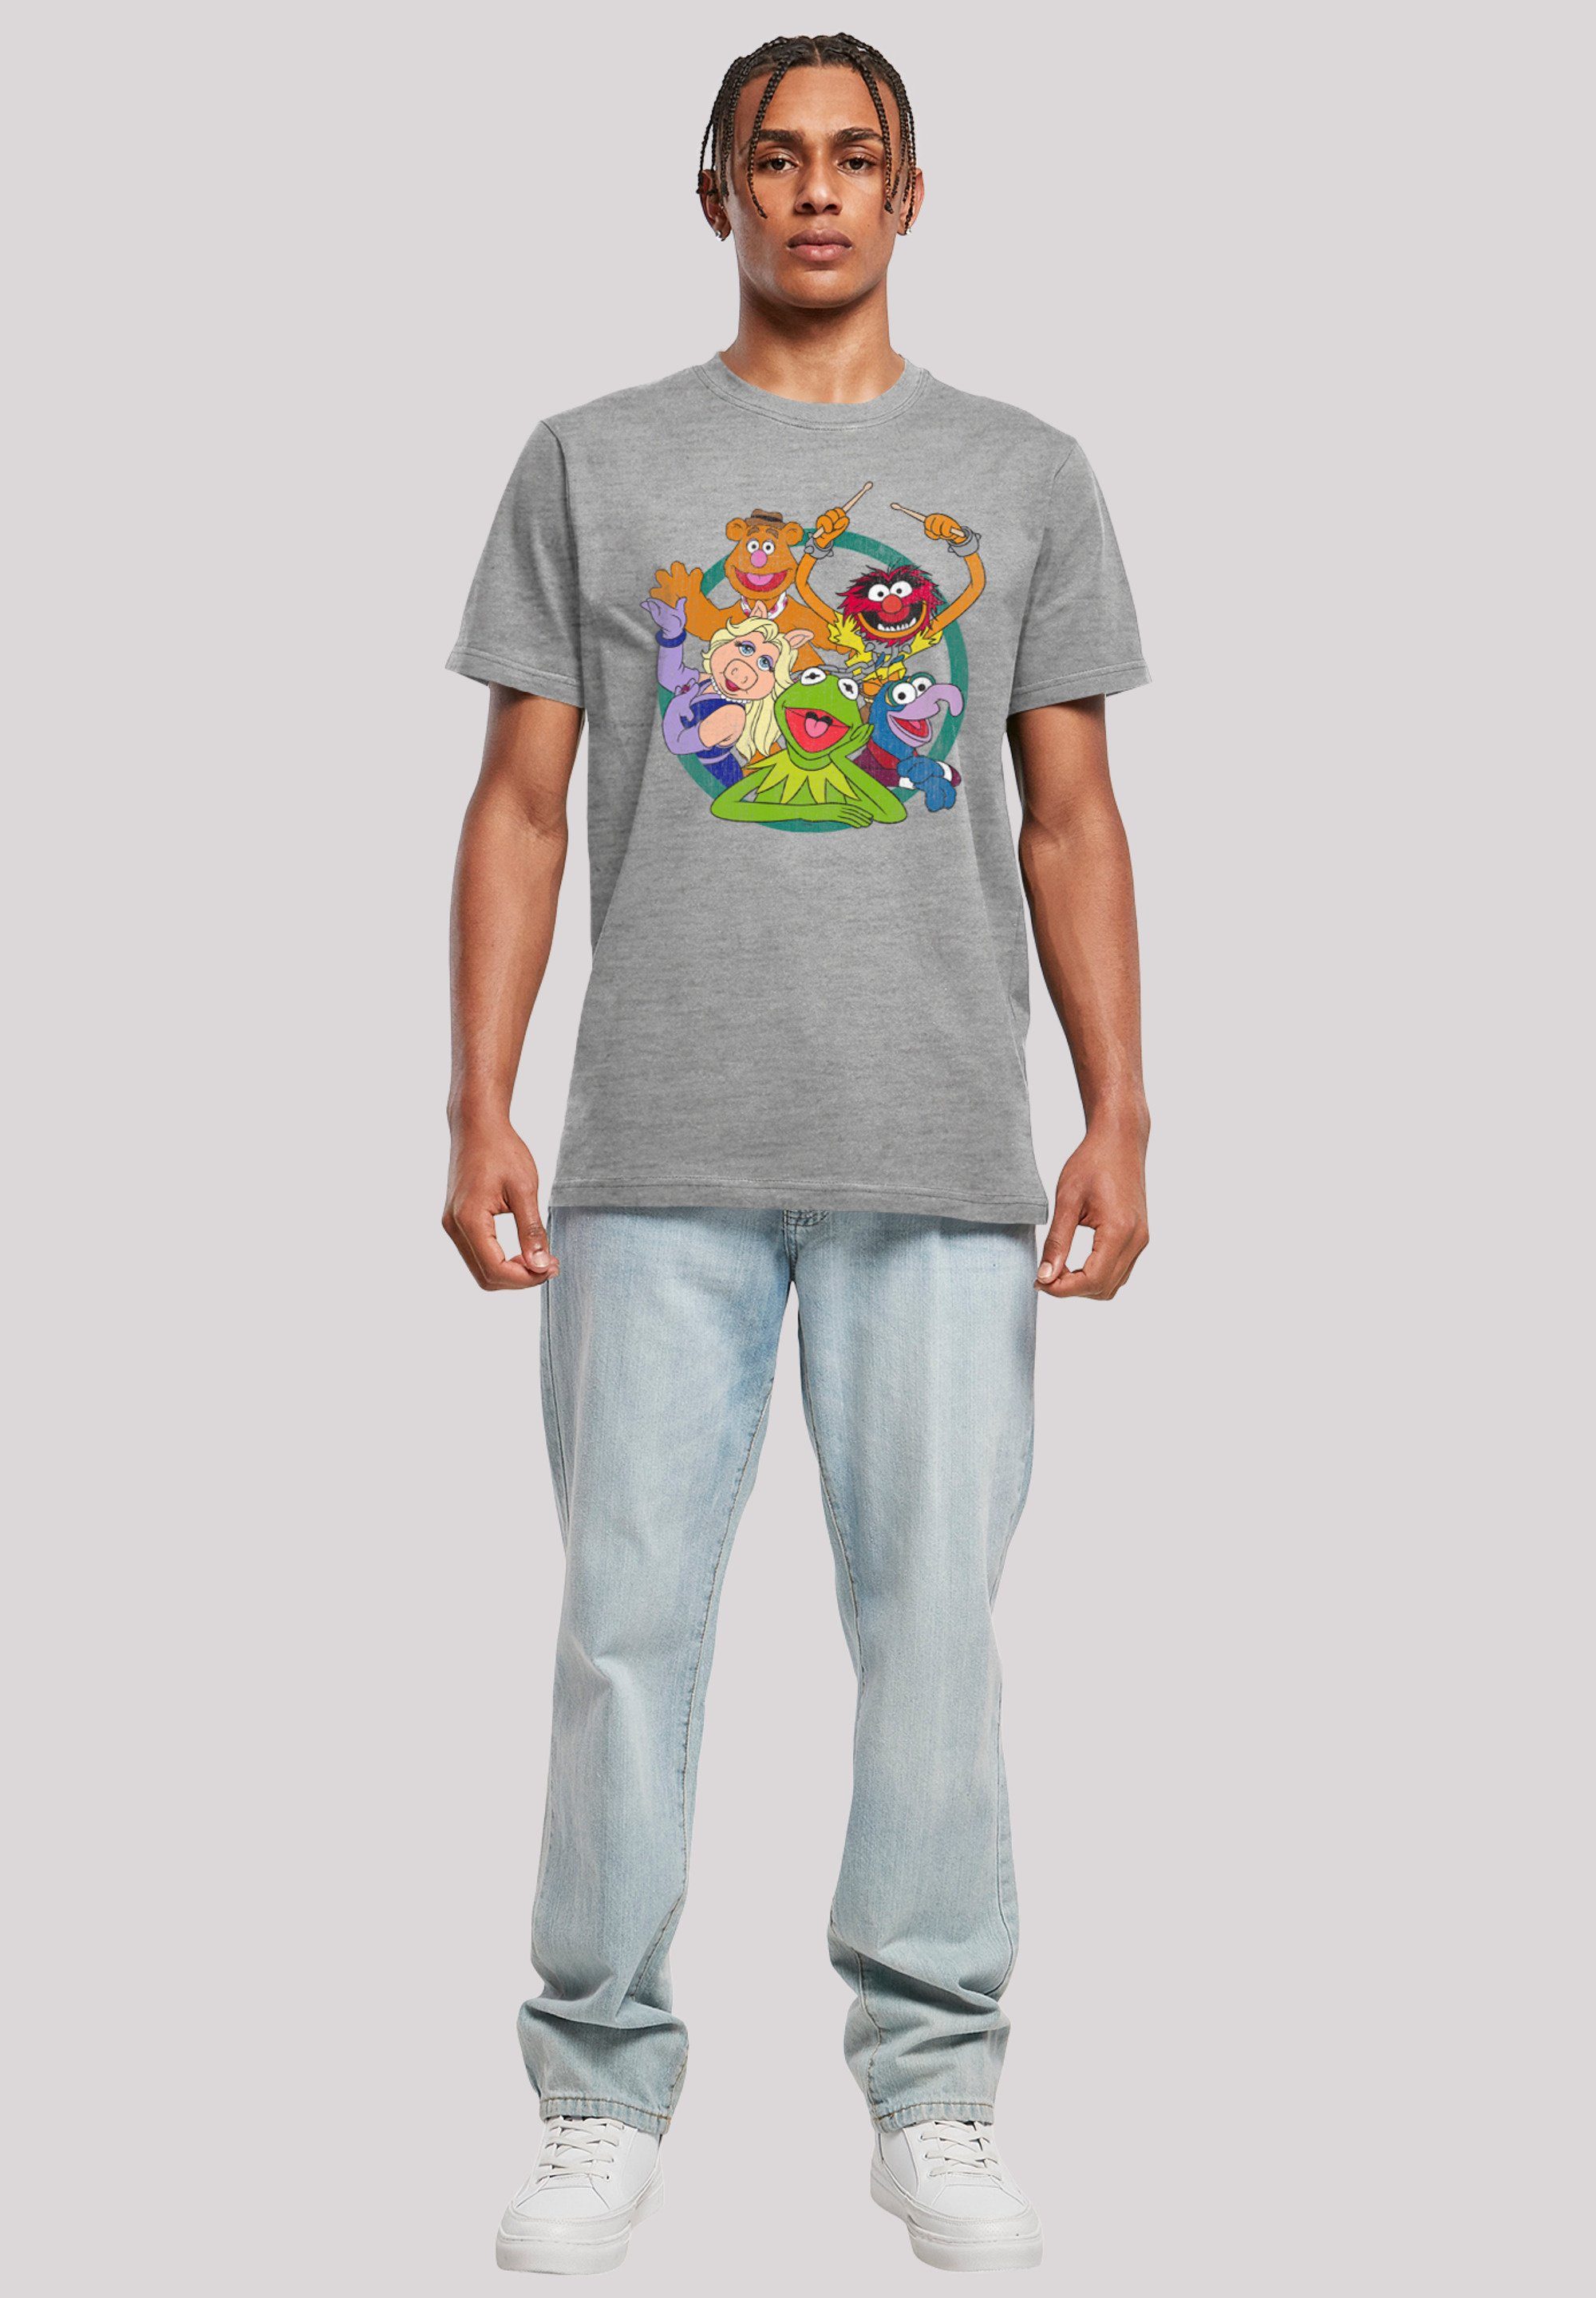 F4NT4STIC T-Shirt heather Muppets Die Circle grey Group Print Disney